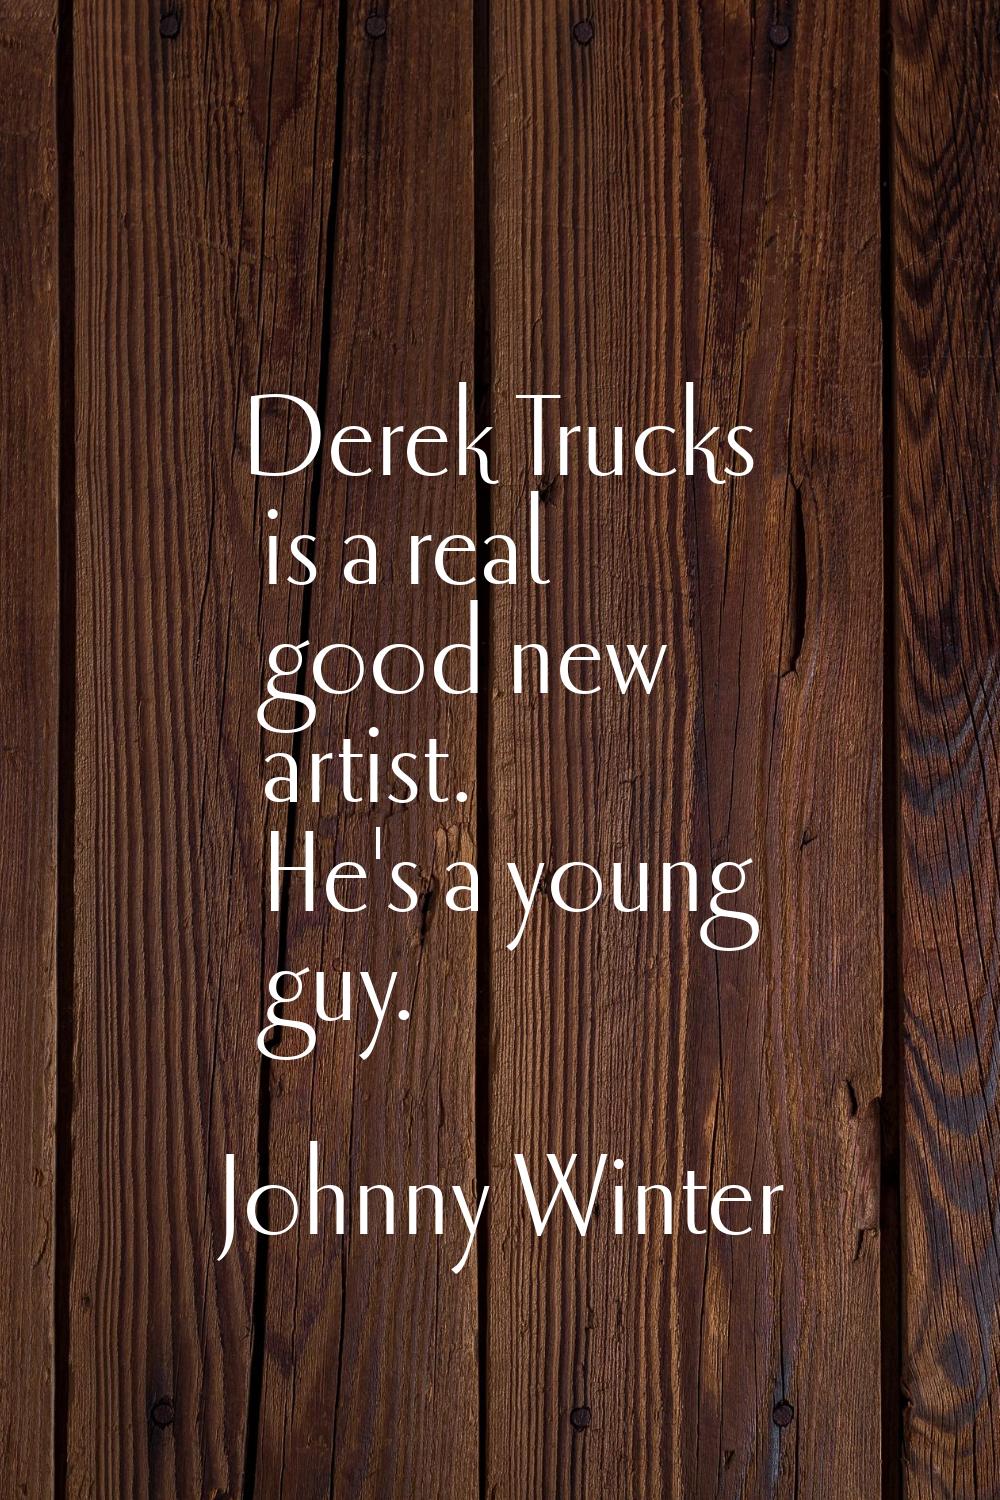 Derek Trucks is a real good new artist. He's a young guy.